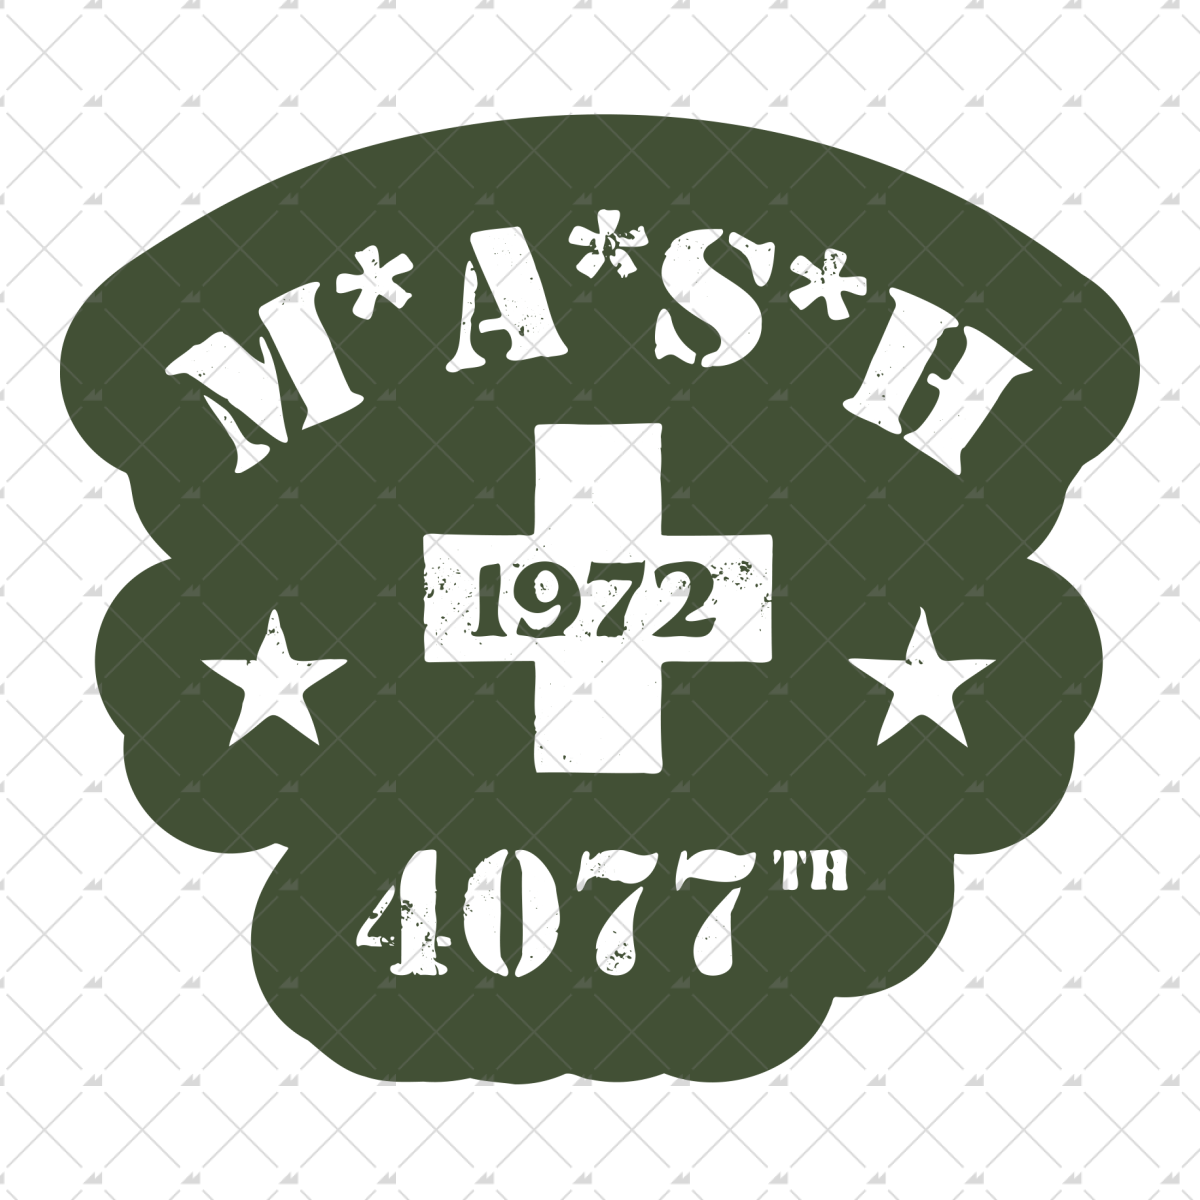 Mash 4077th - Sticker